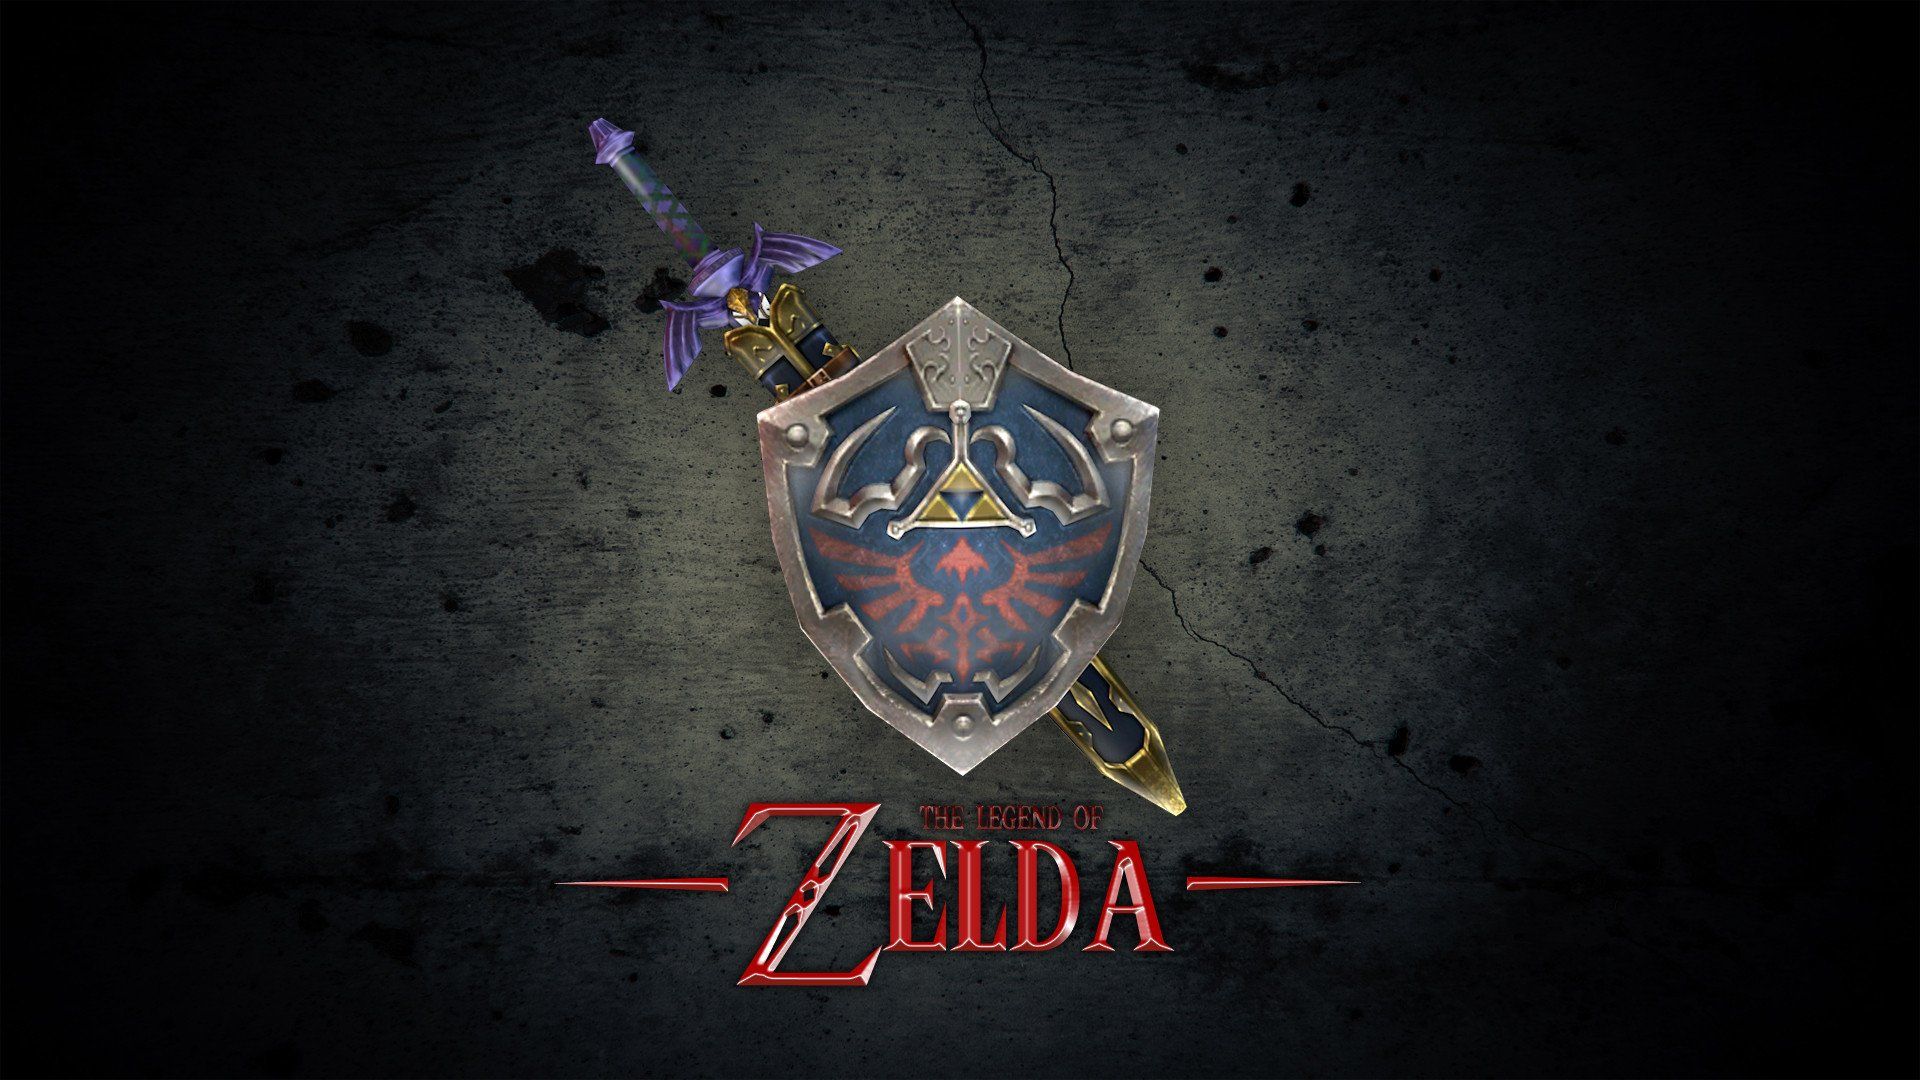 The Legend of Zelda, Nintendo, Master Sword, Hylian Shield